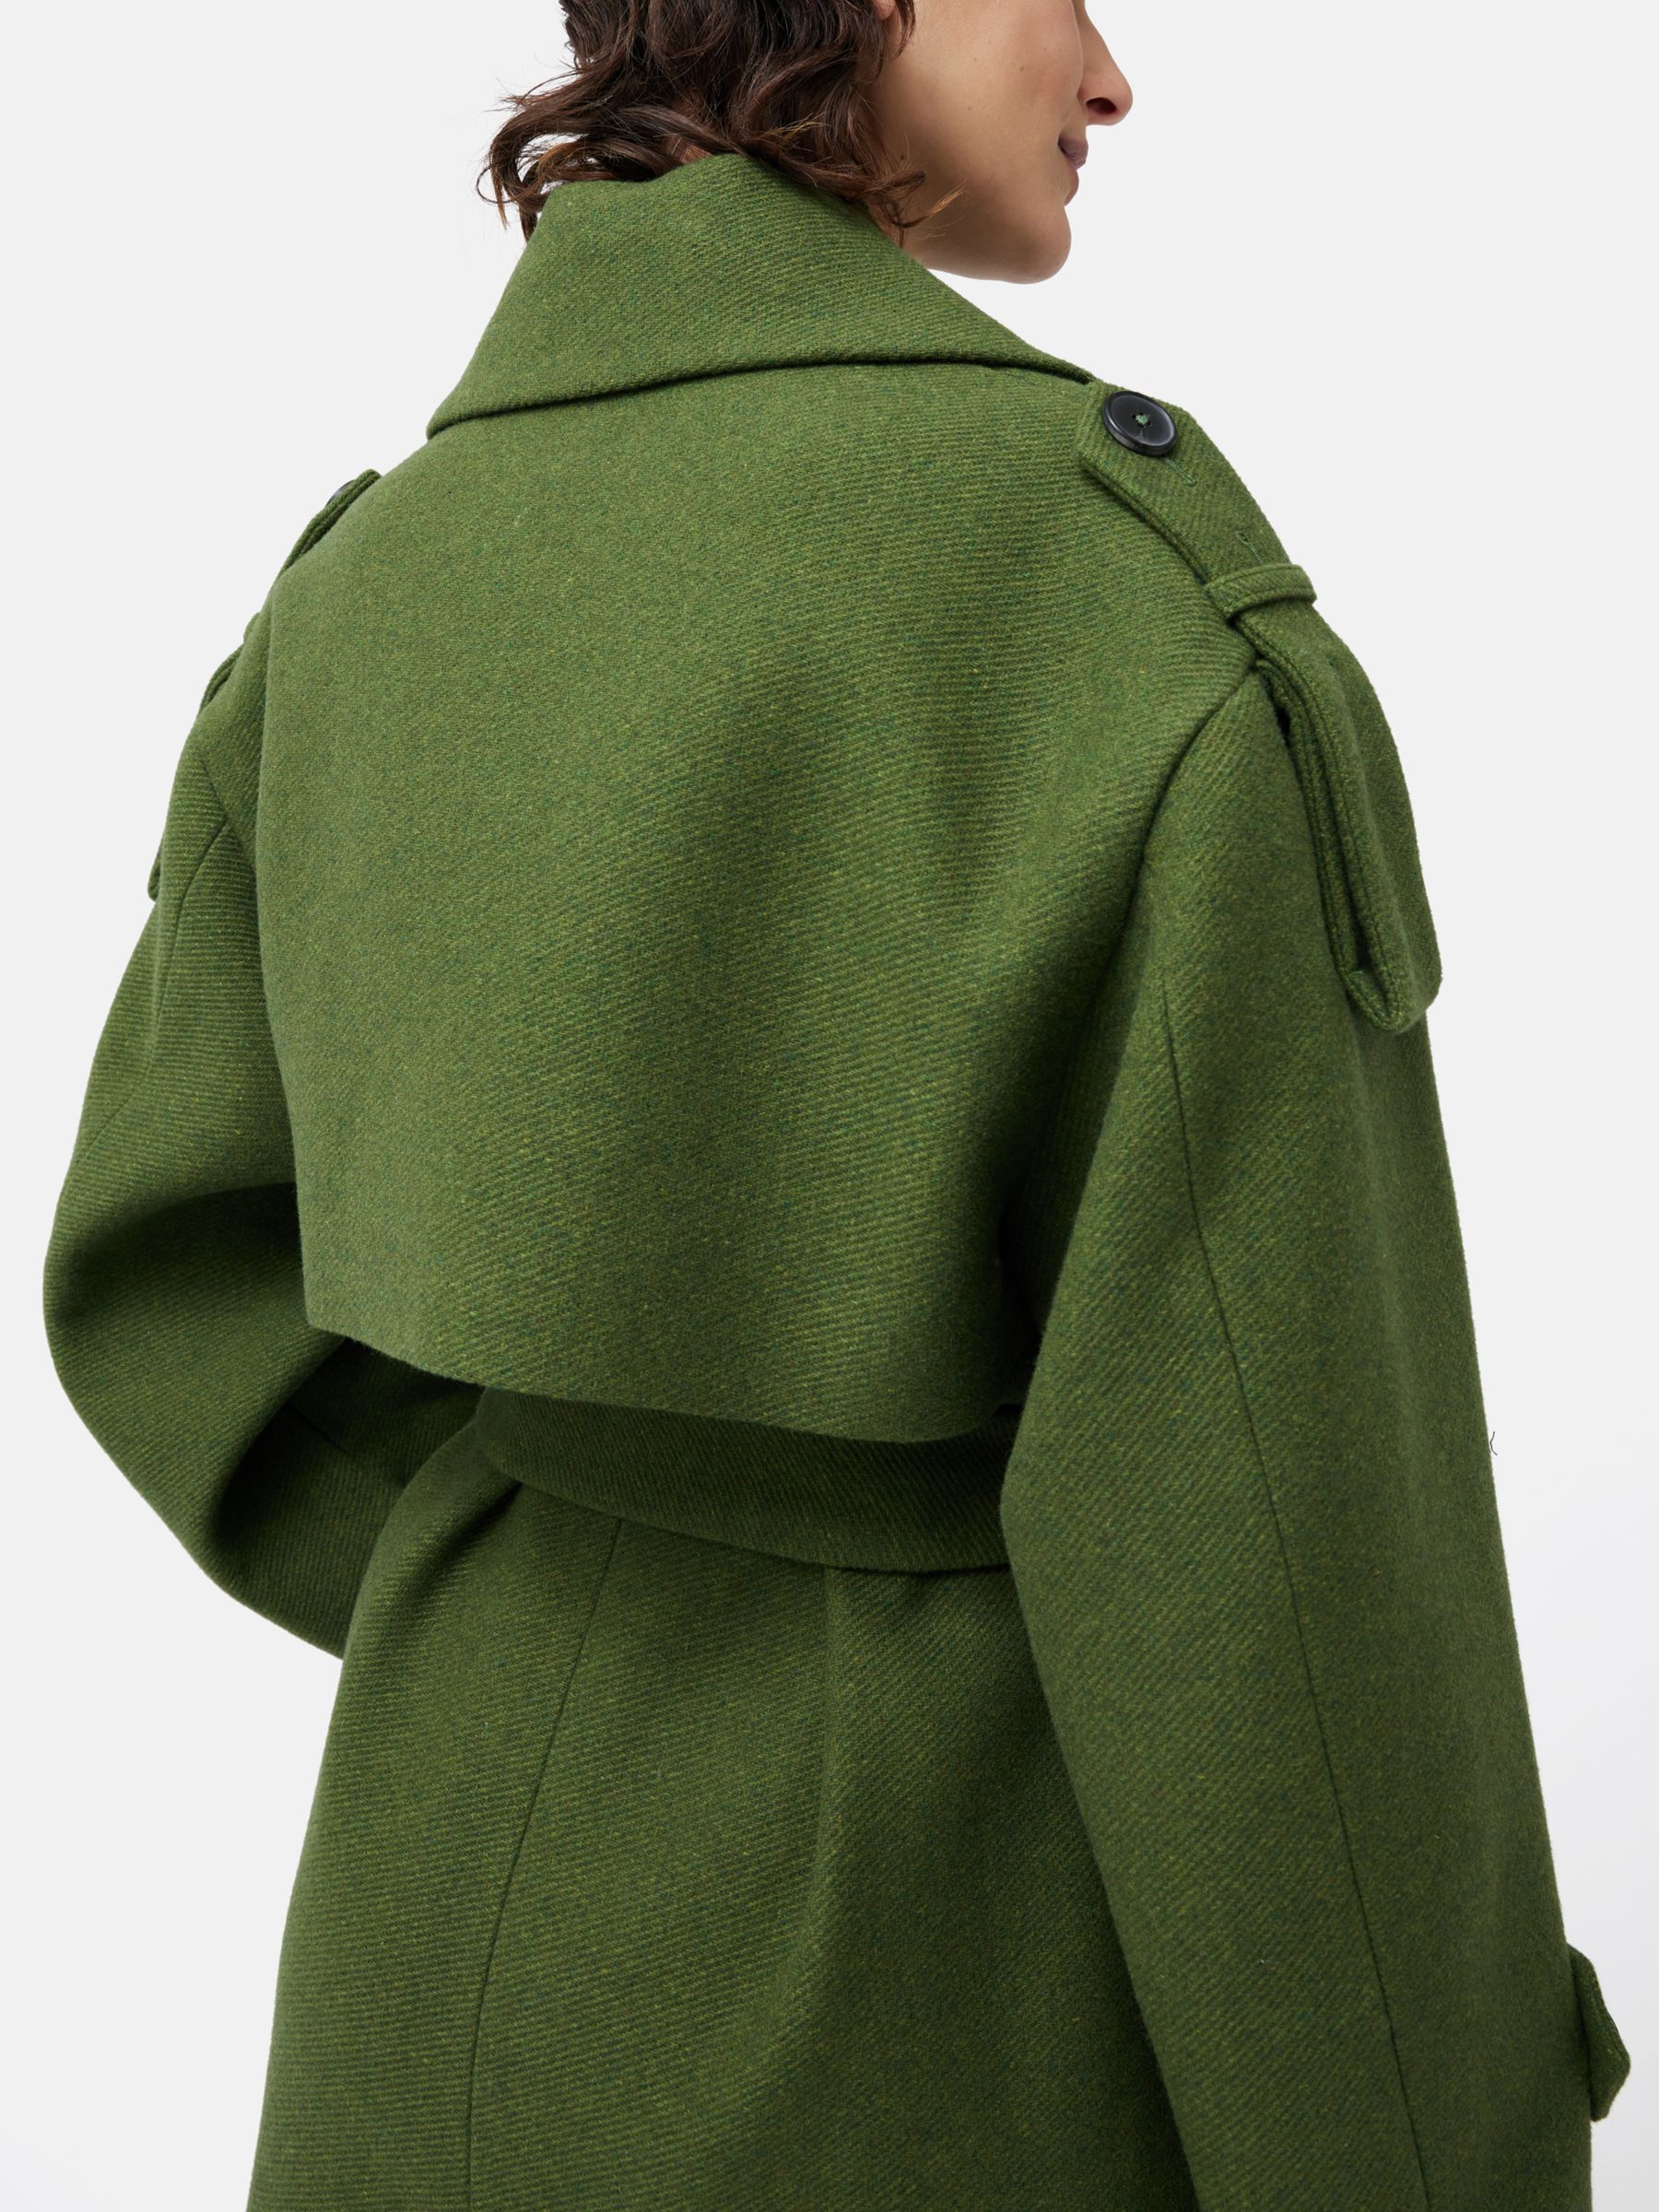 Jigsaw Nelson Italian Twill Wool Blend Trench Coat, Khaki, XL